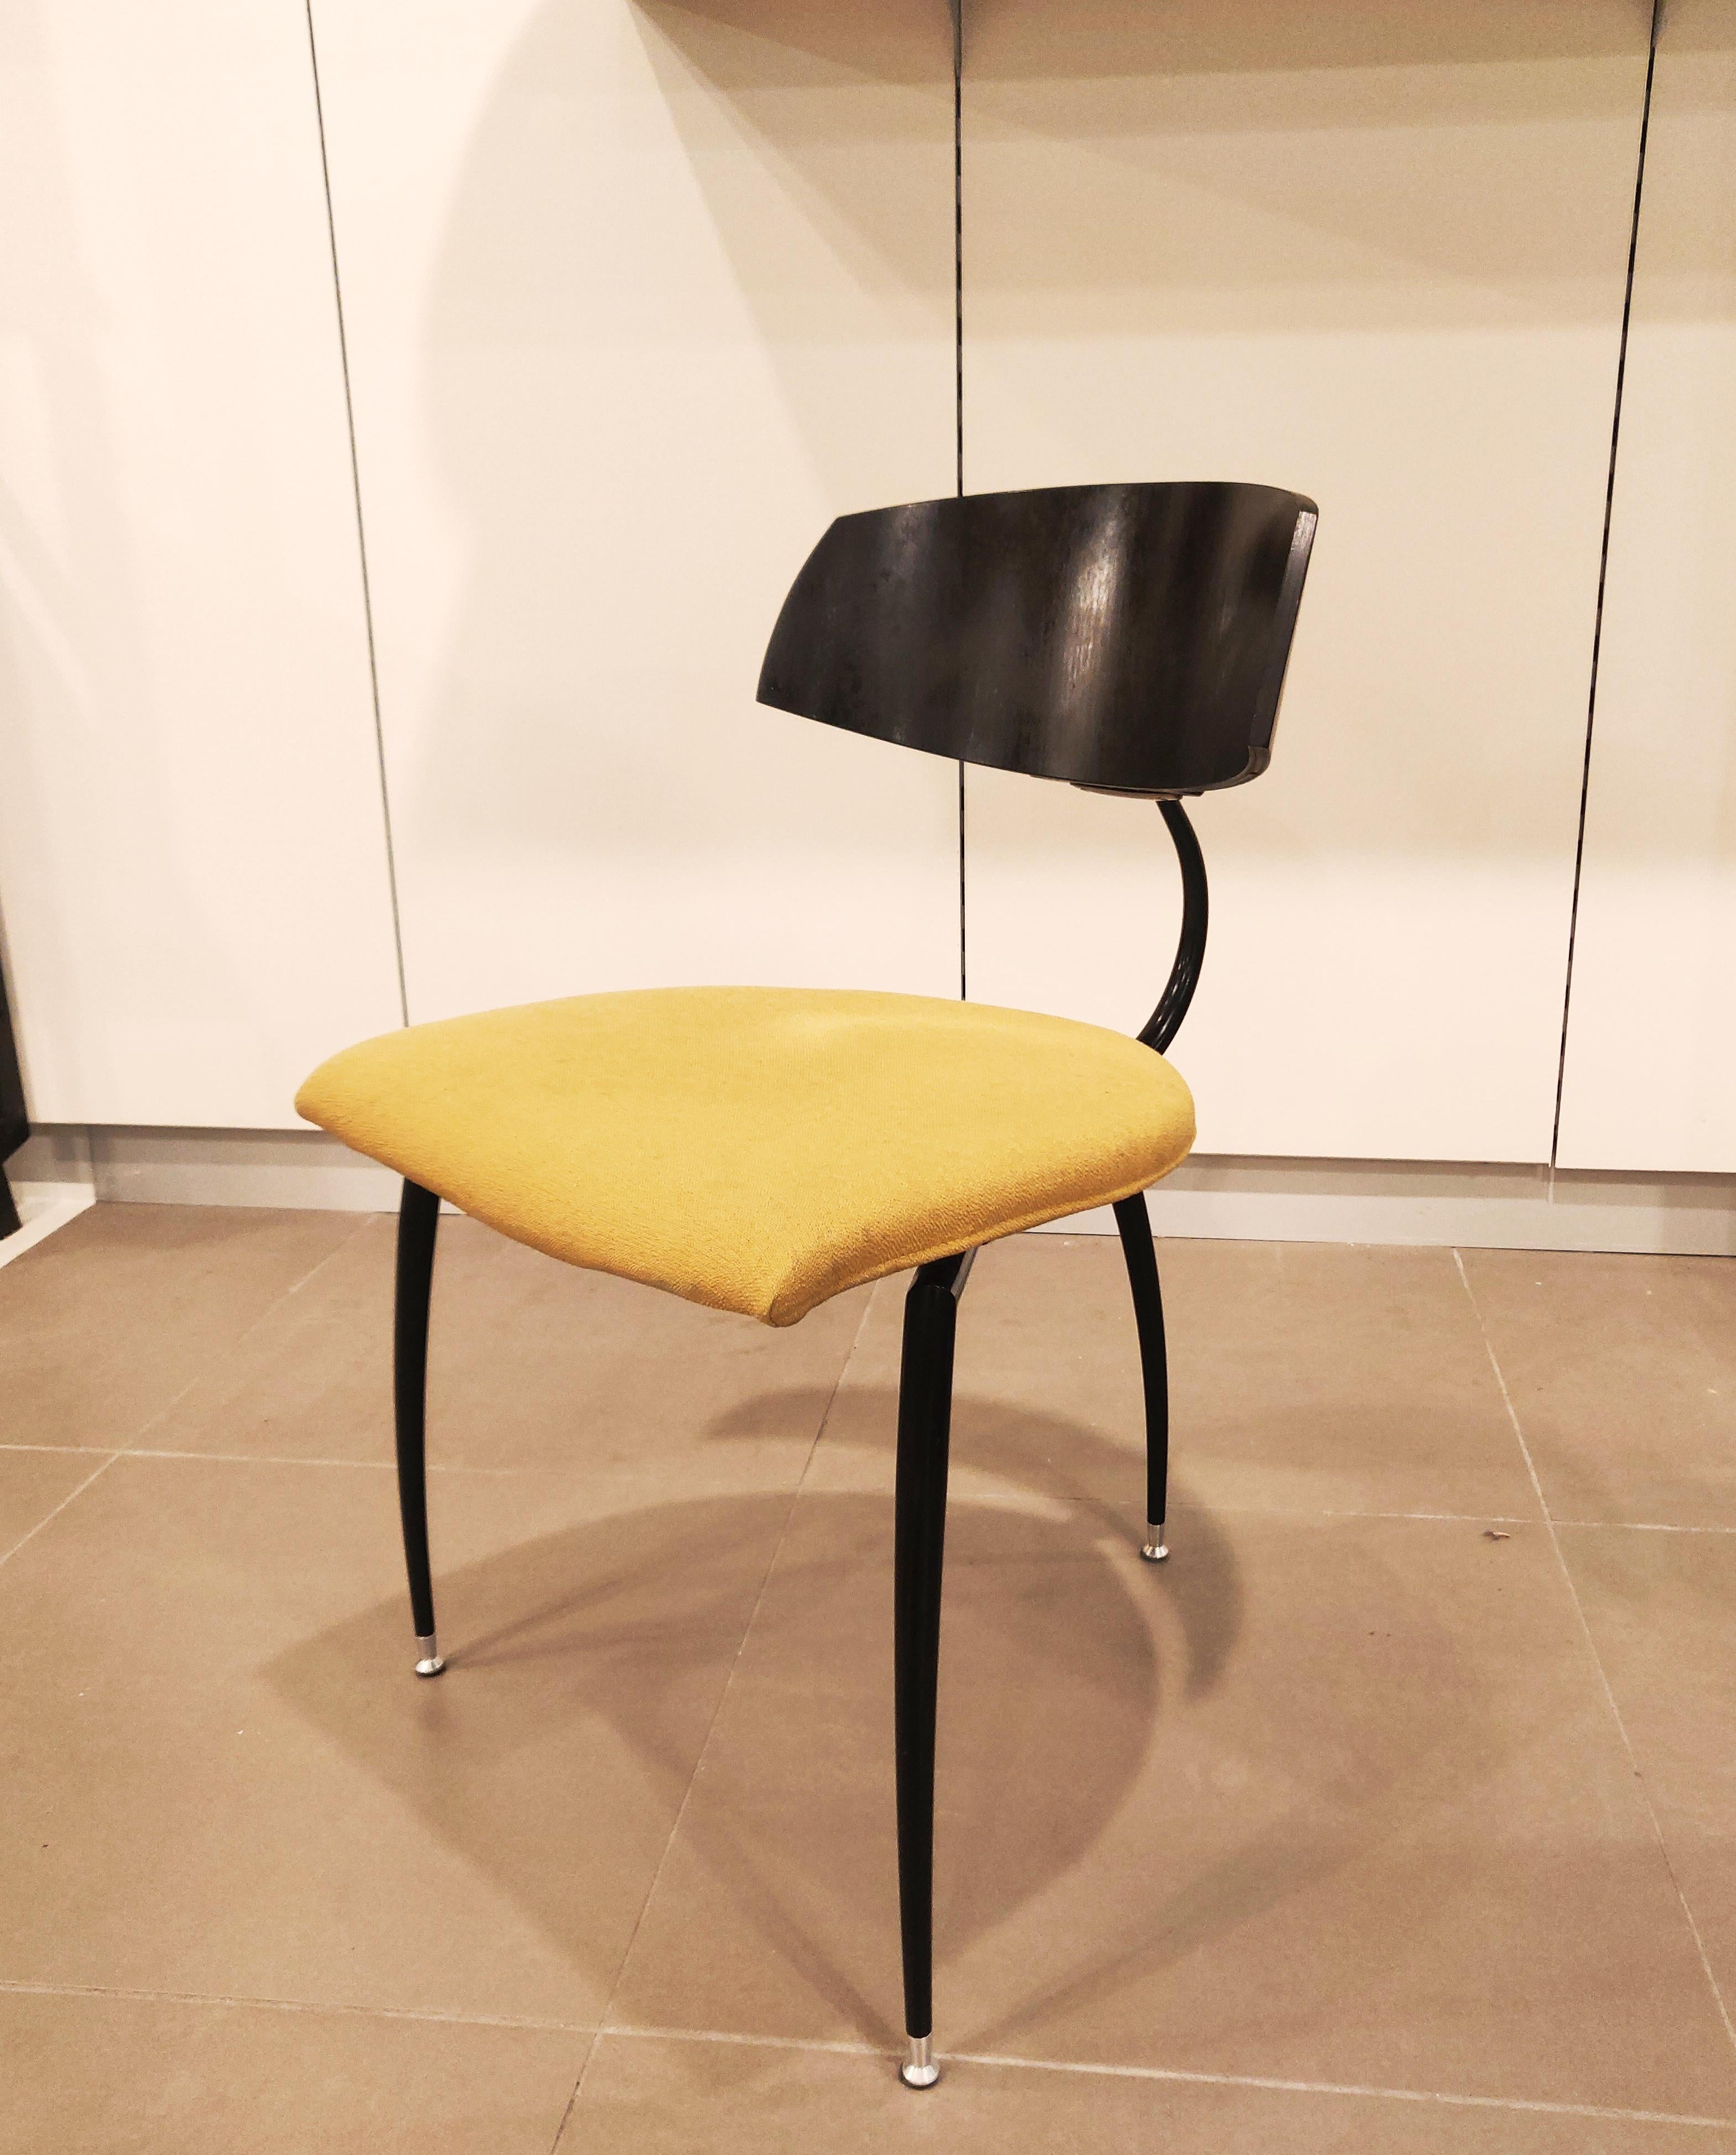 Minimalist Dutch Design Tripod Chair by Lande, 1980s For Sale